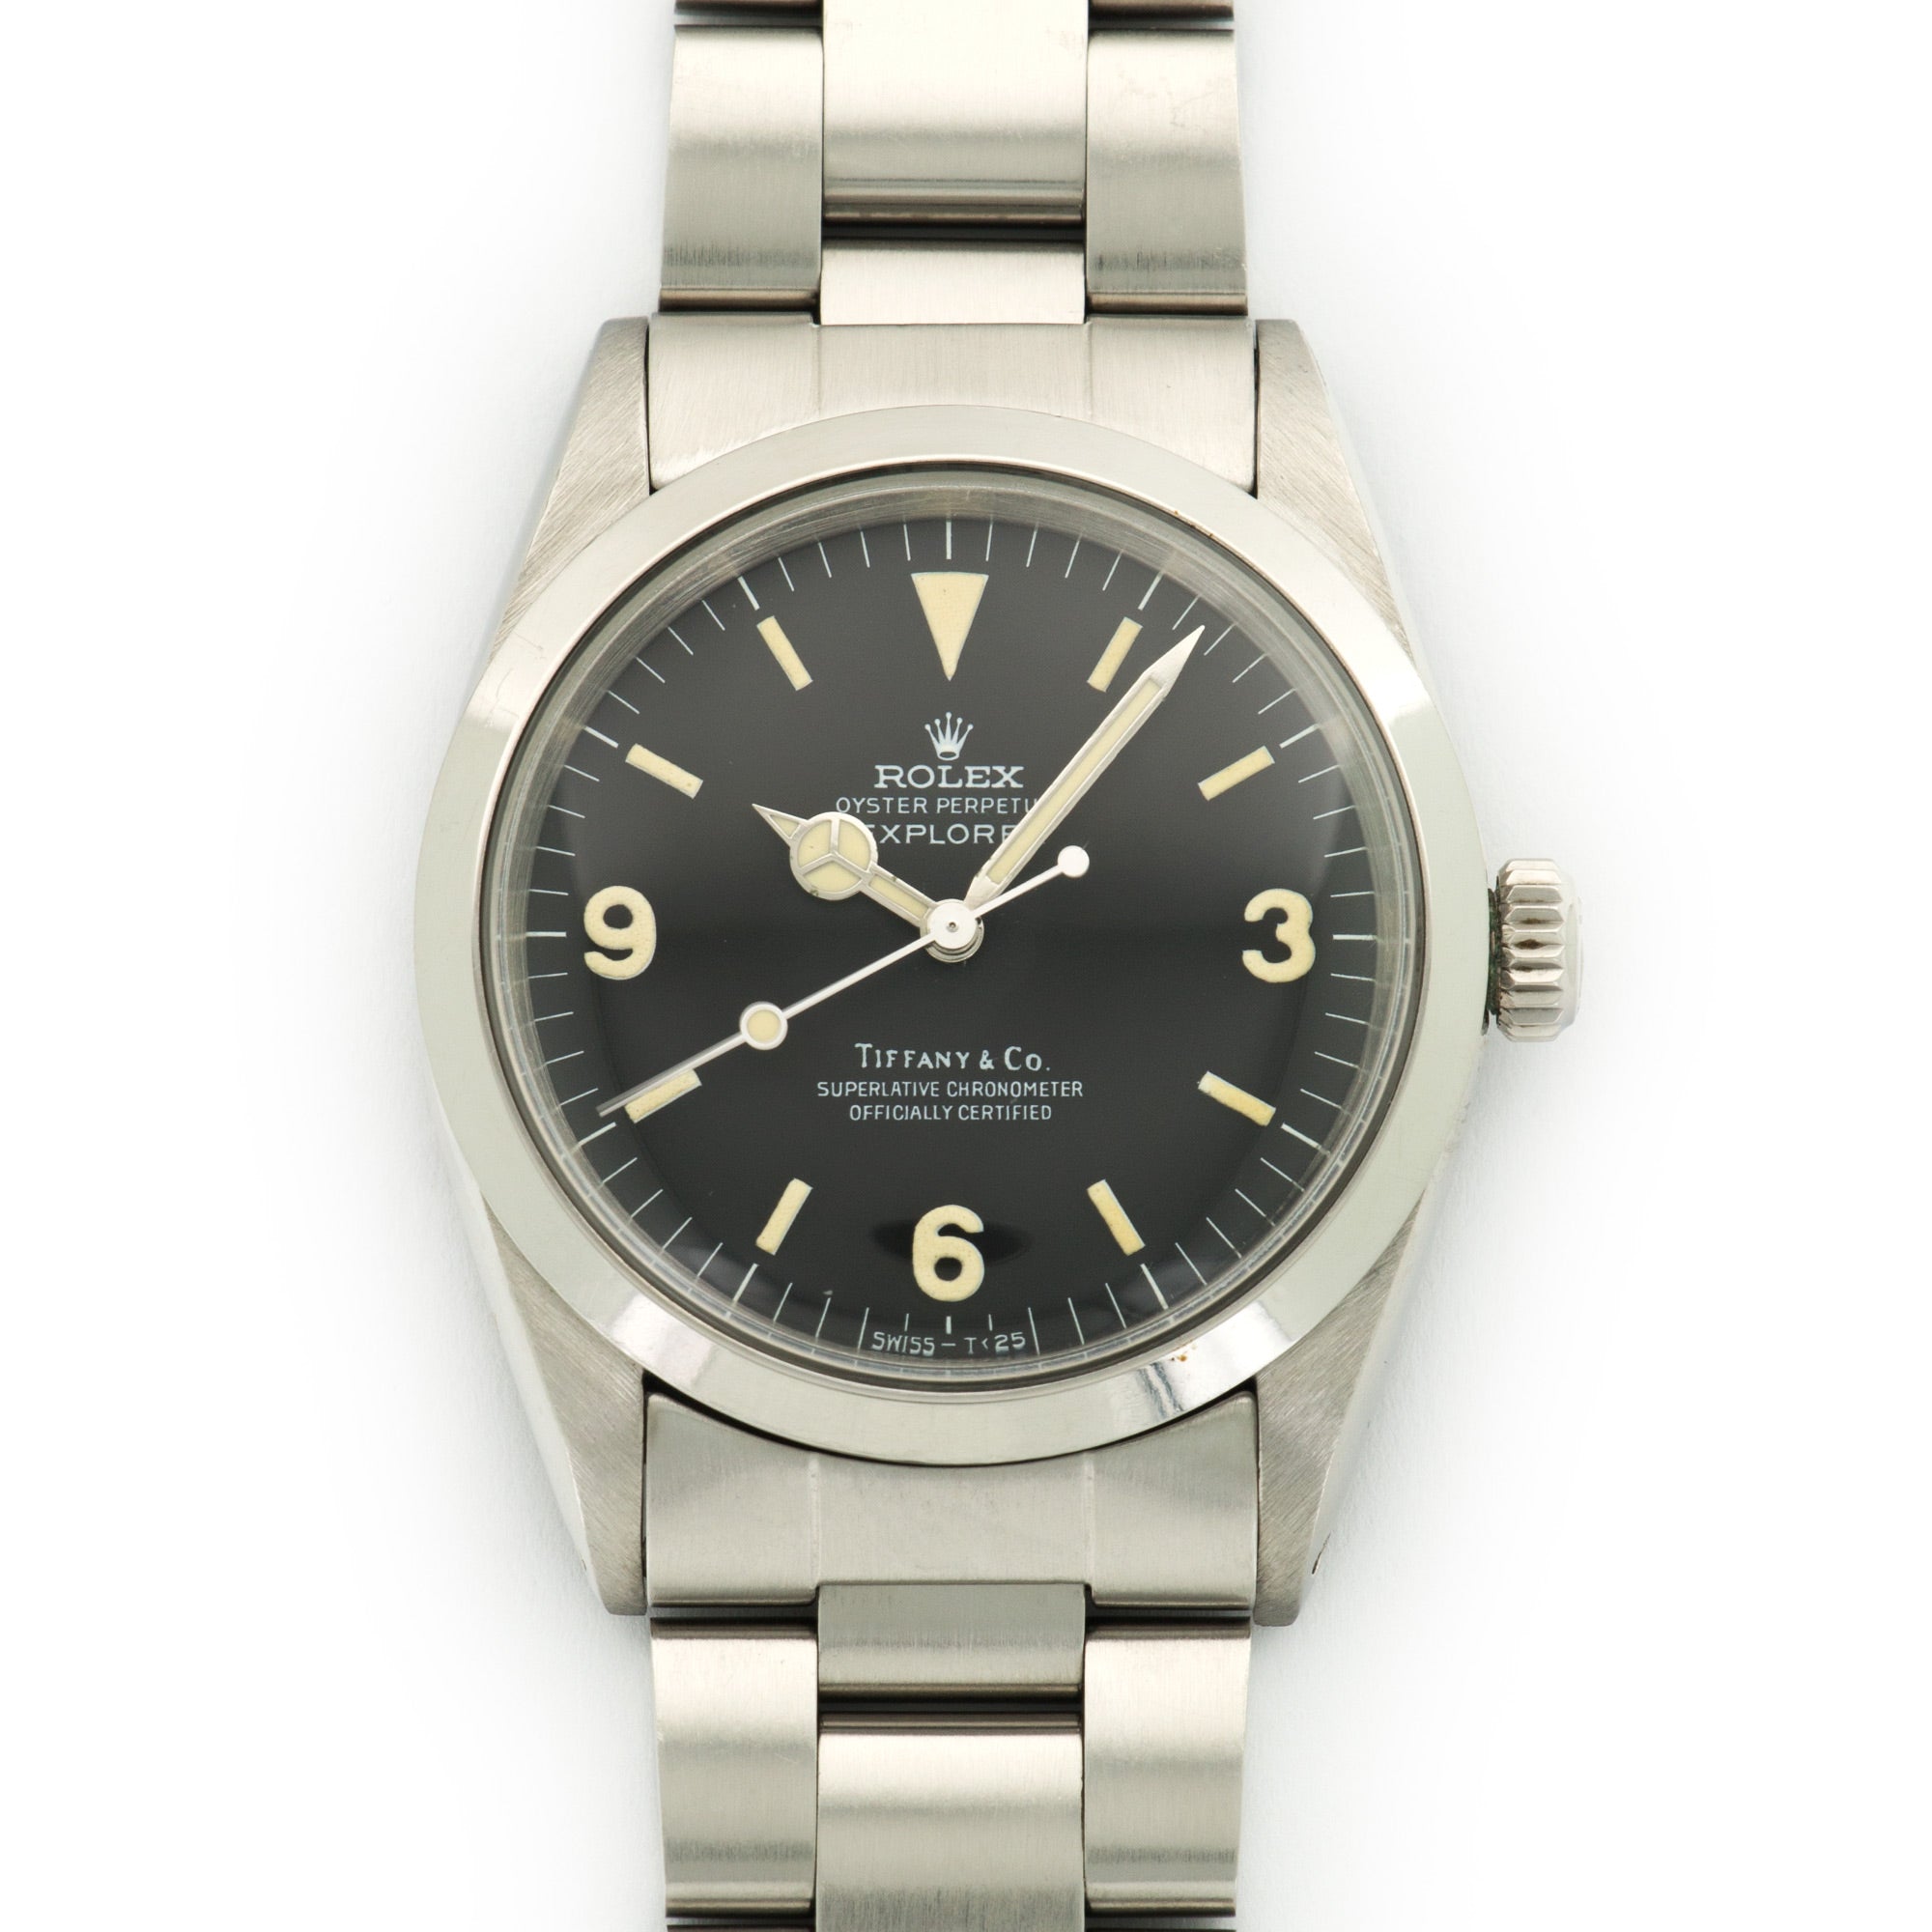 Rolex - Rolex Explorer Tiffany & Co Watch Ref. 1016 - The Keystone Watches